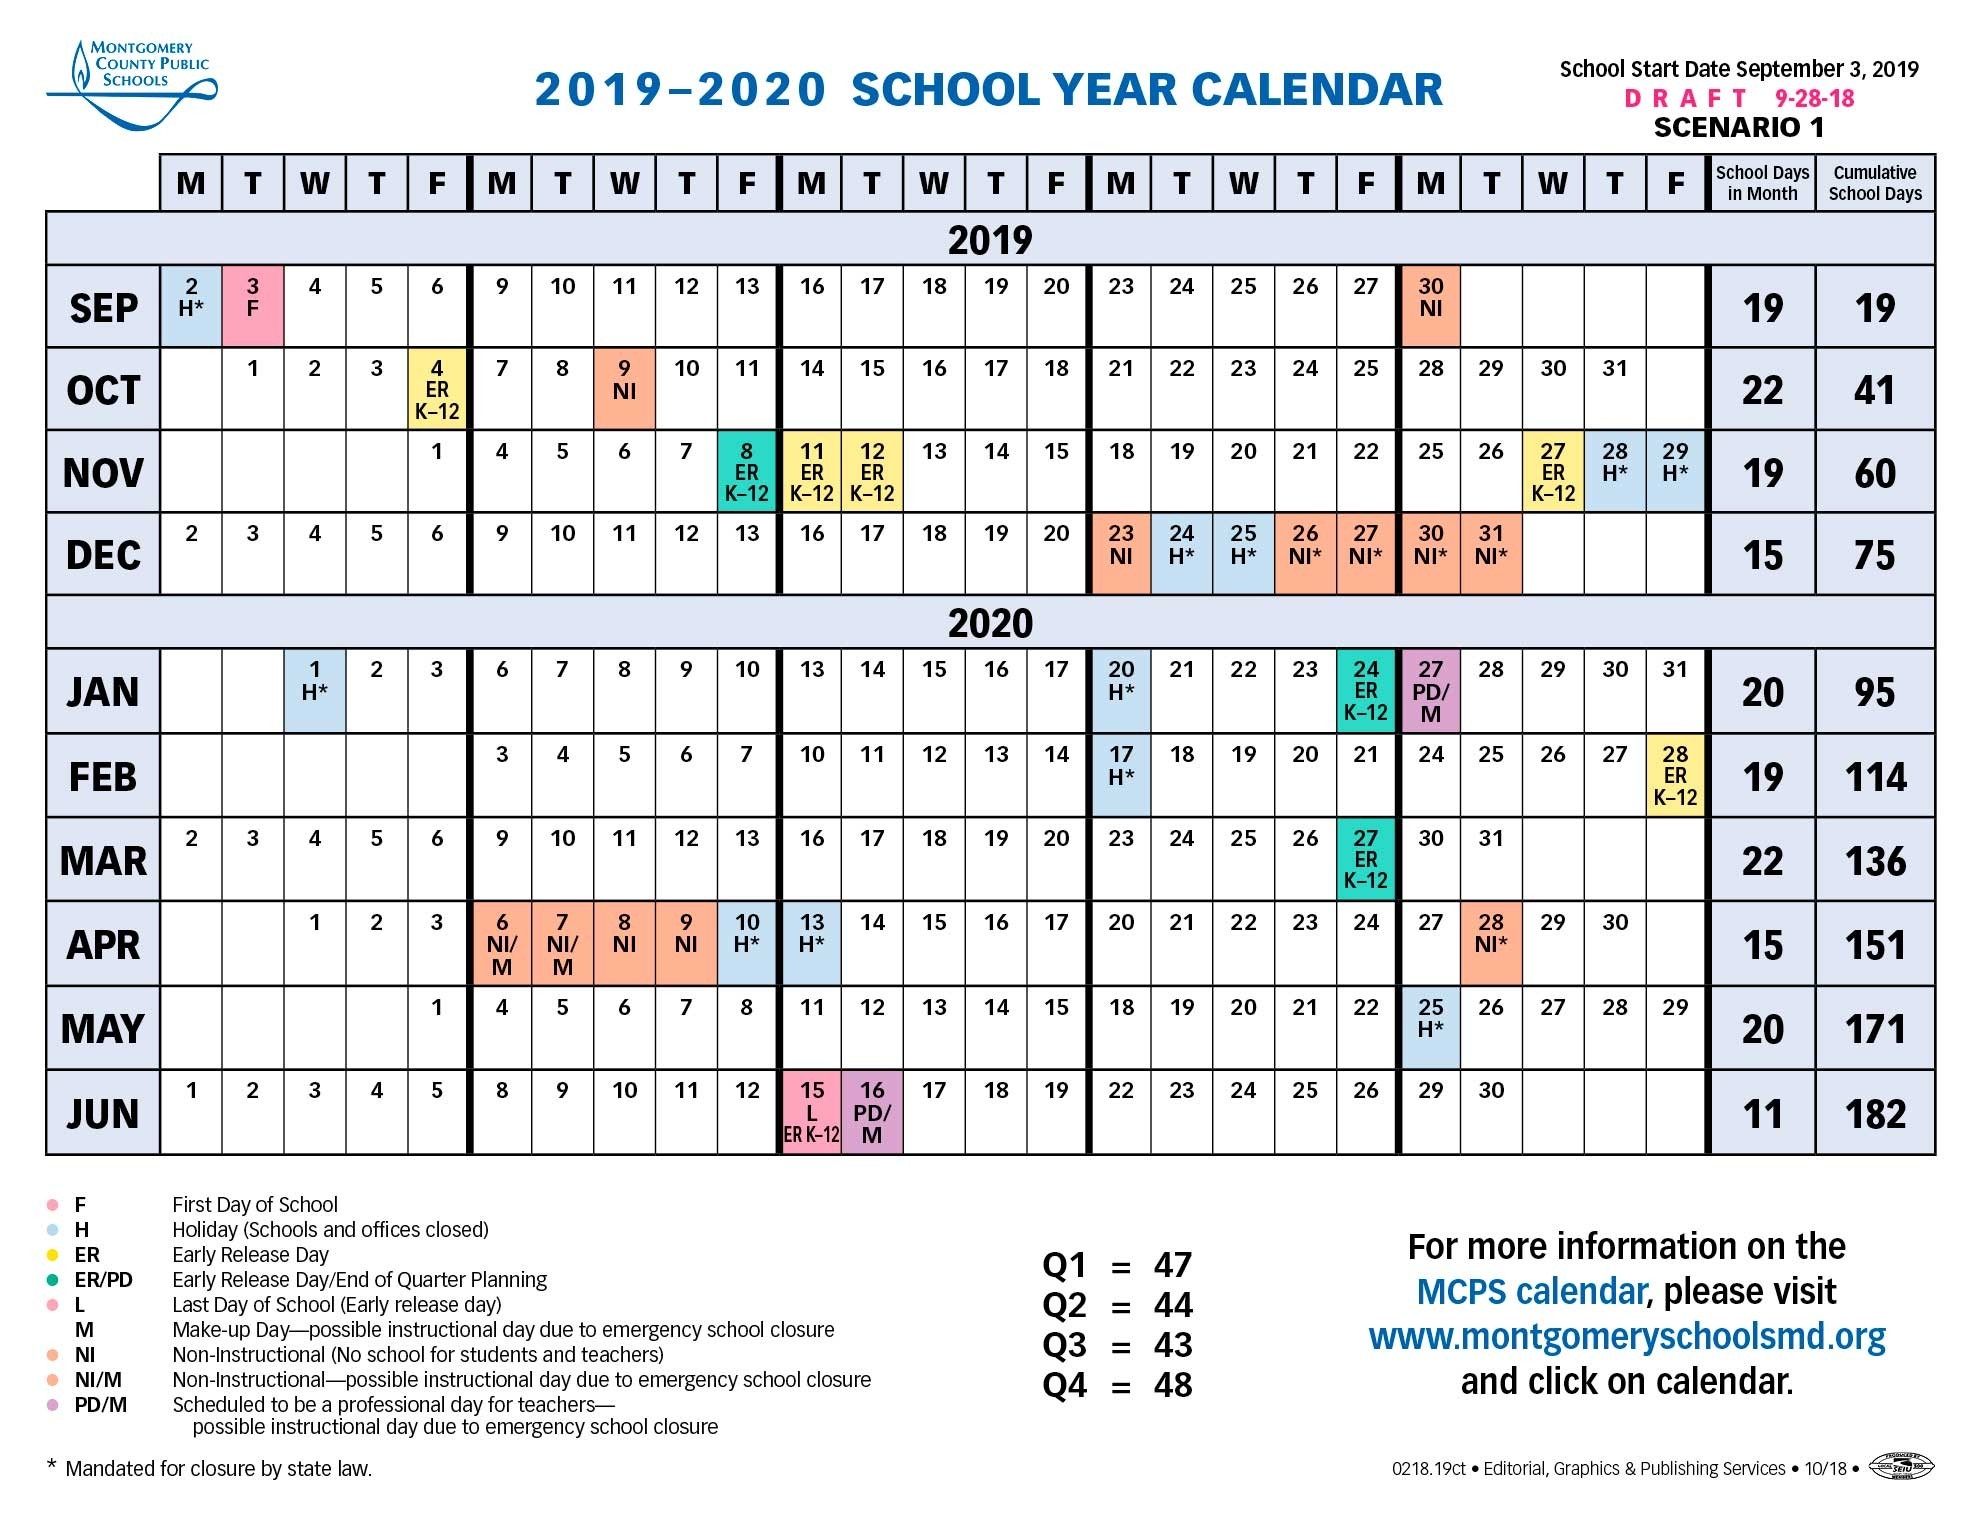 School Board Approves Longer Spring Break For 2019-2020-Jewish Holidays In 2020